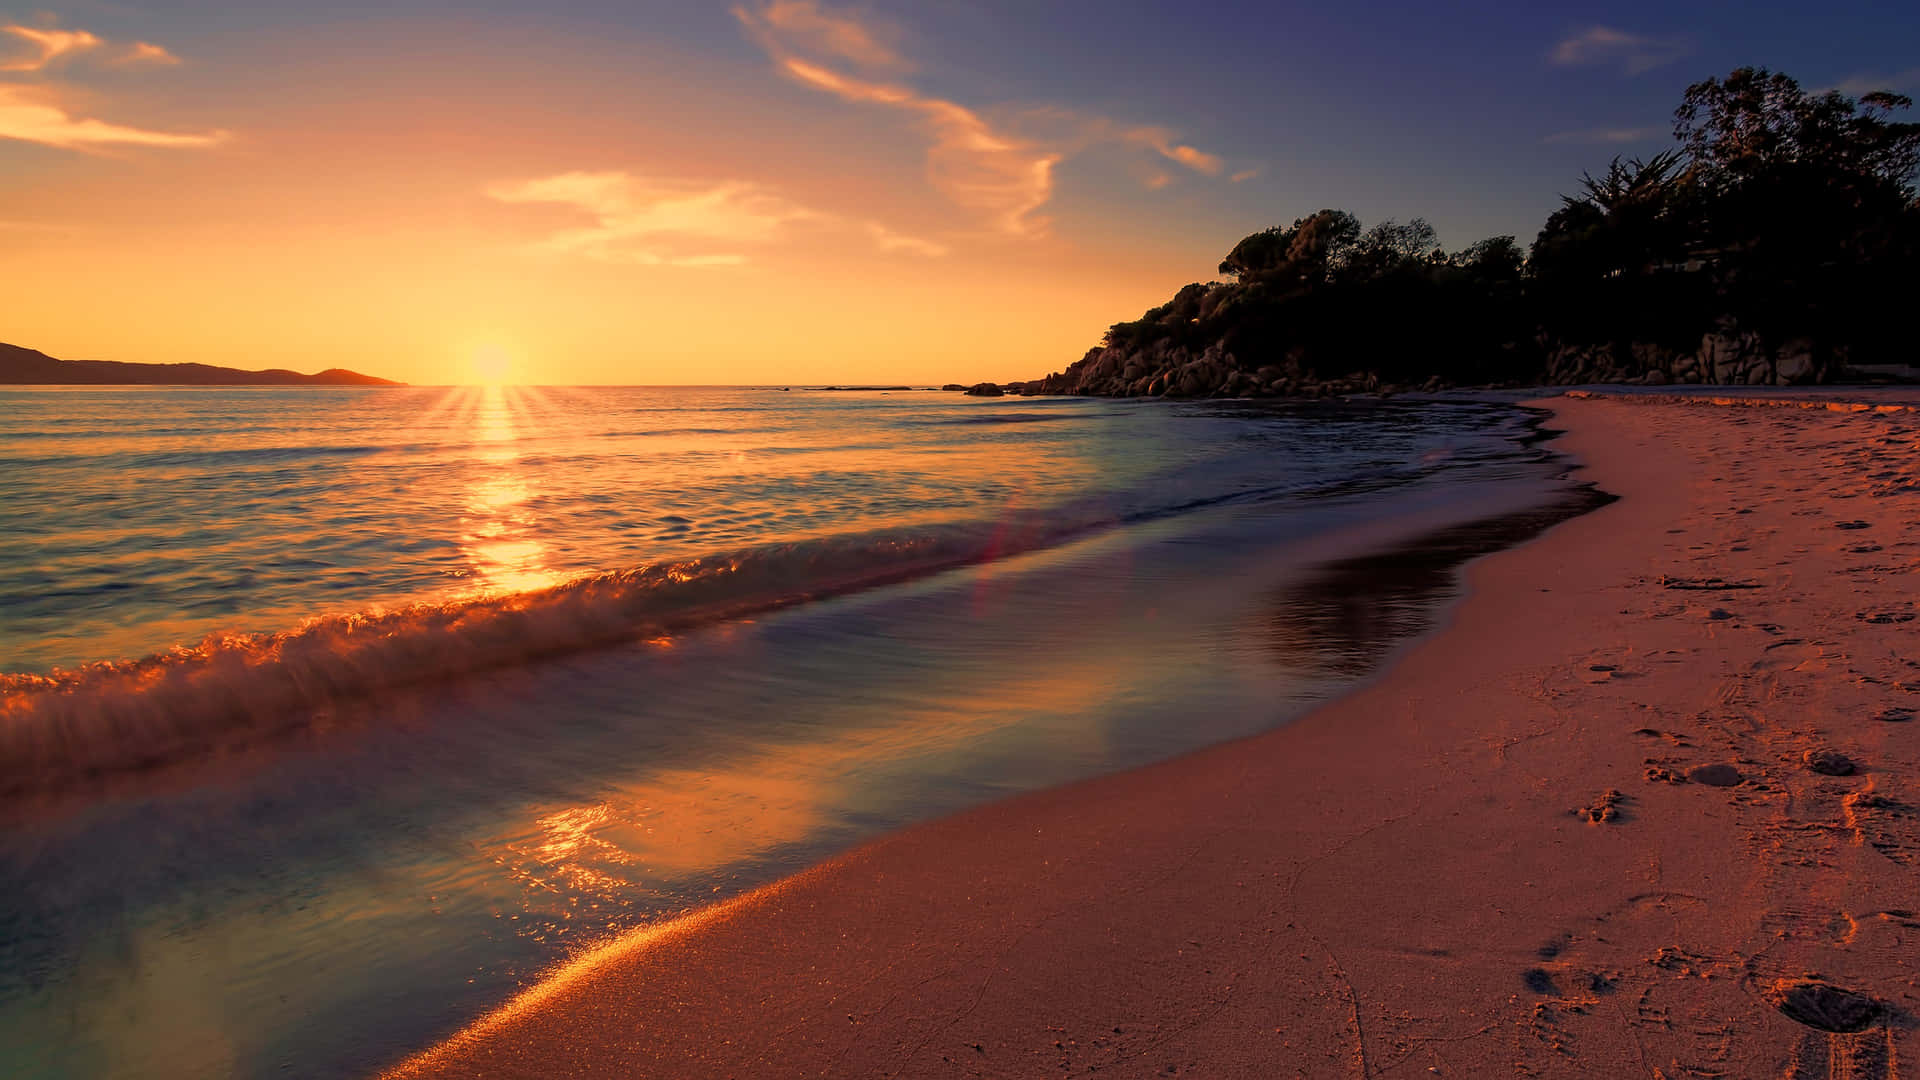 Image  "A Stunning Sunrise at a Beach Sunset"